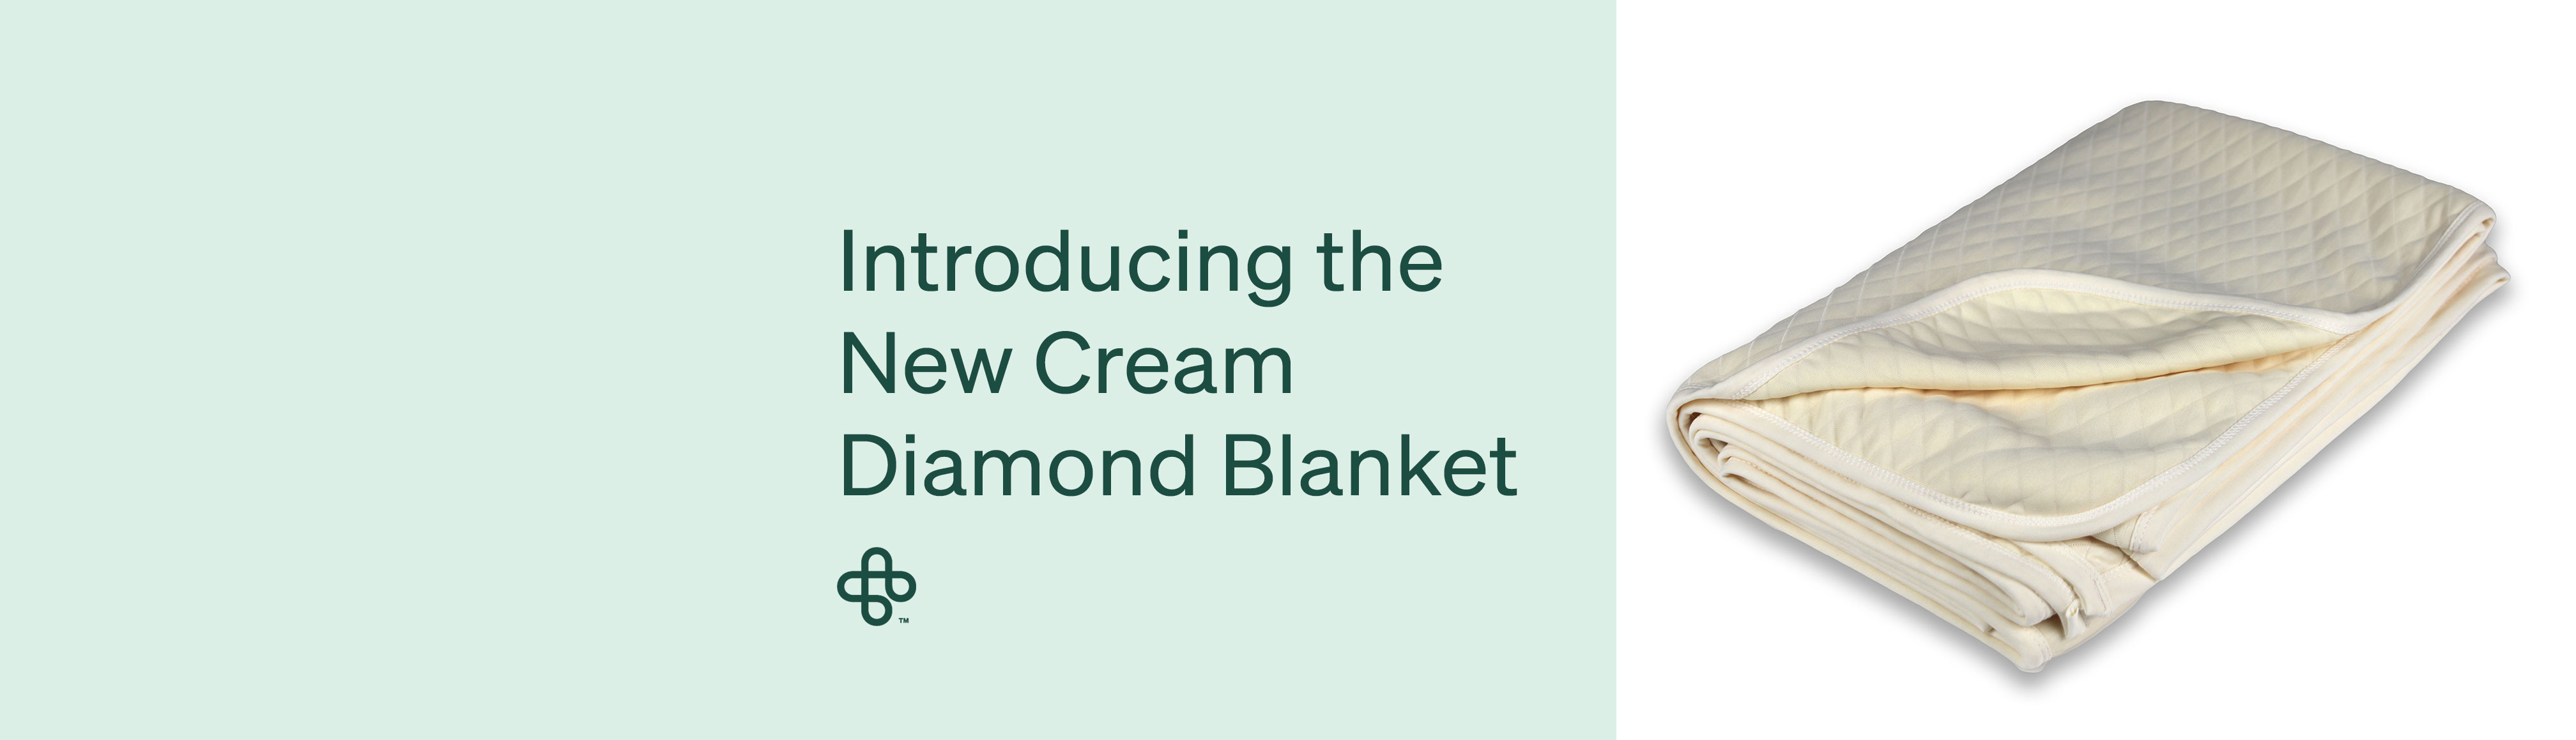 Introducing the New Cream Diamond Blanket